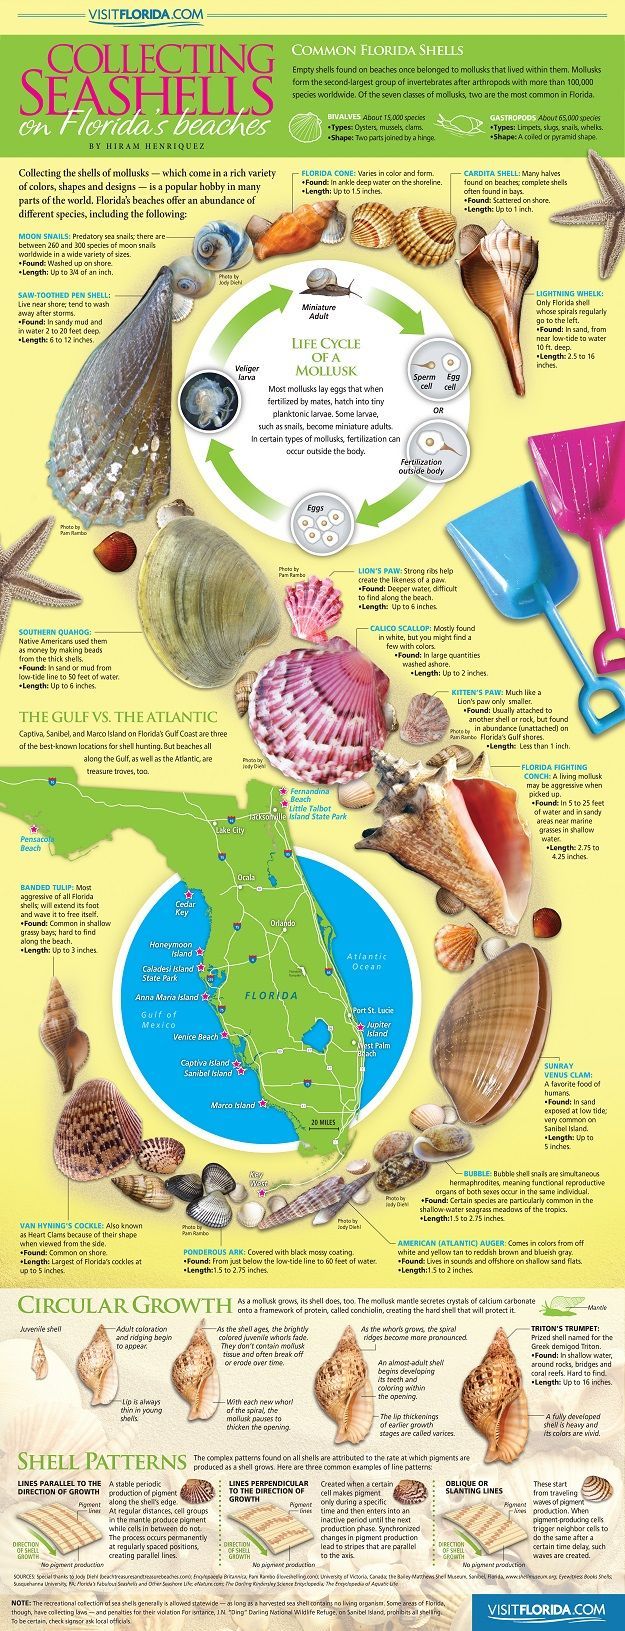 Collecting Seashells on Florida’s Beaches